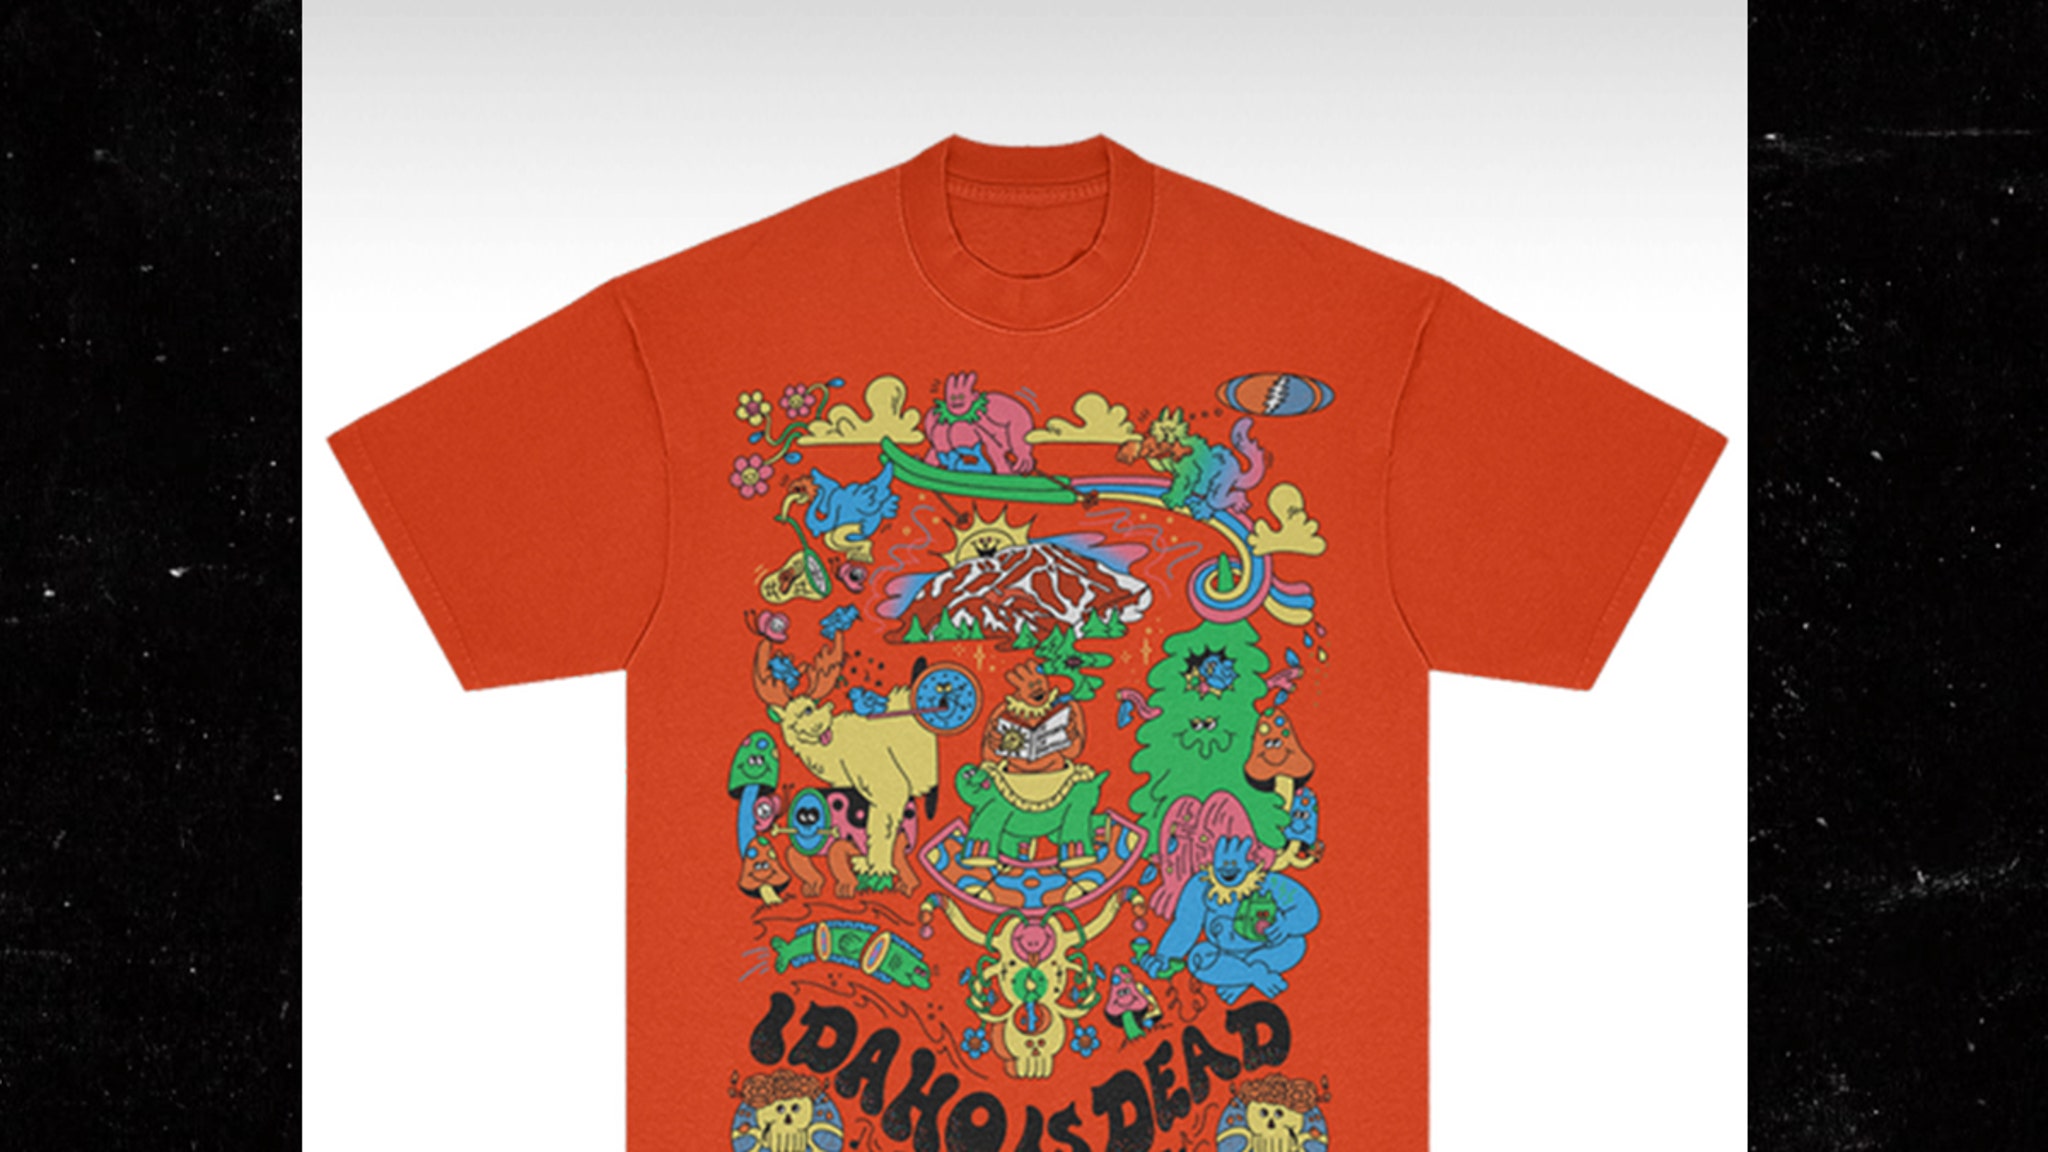 Grateful Dead Selling ‘Idaho is Dead’ T-Shirts on Heels of Idaho College Murders